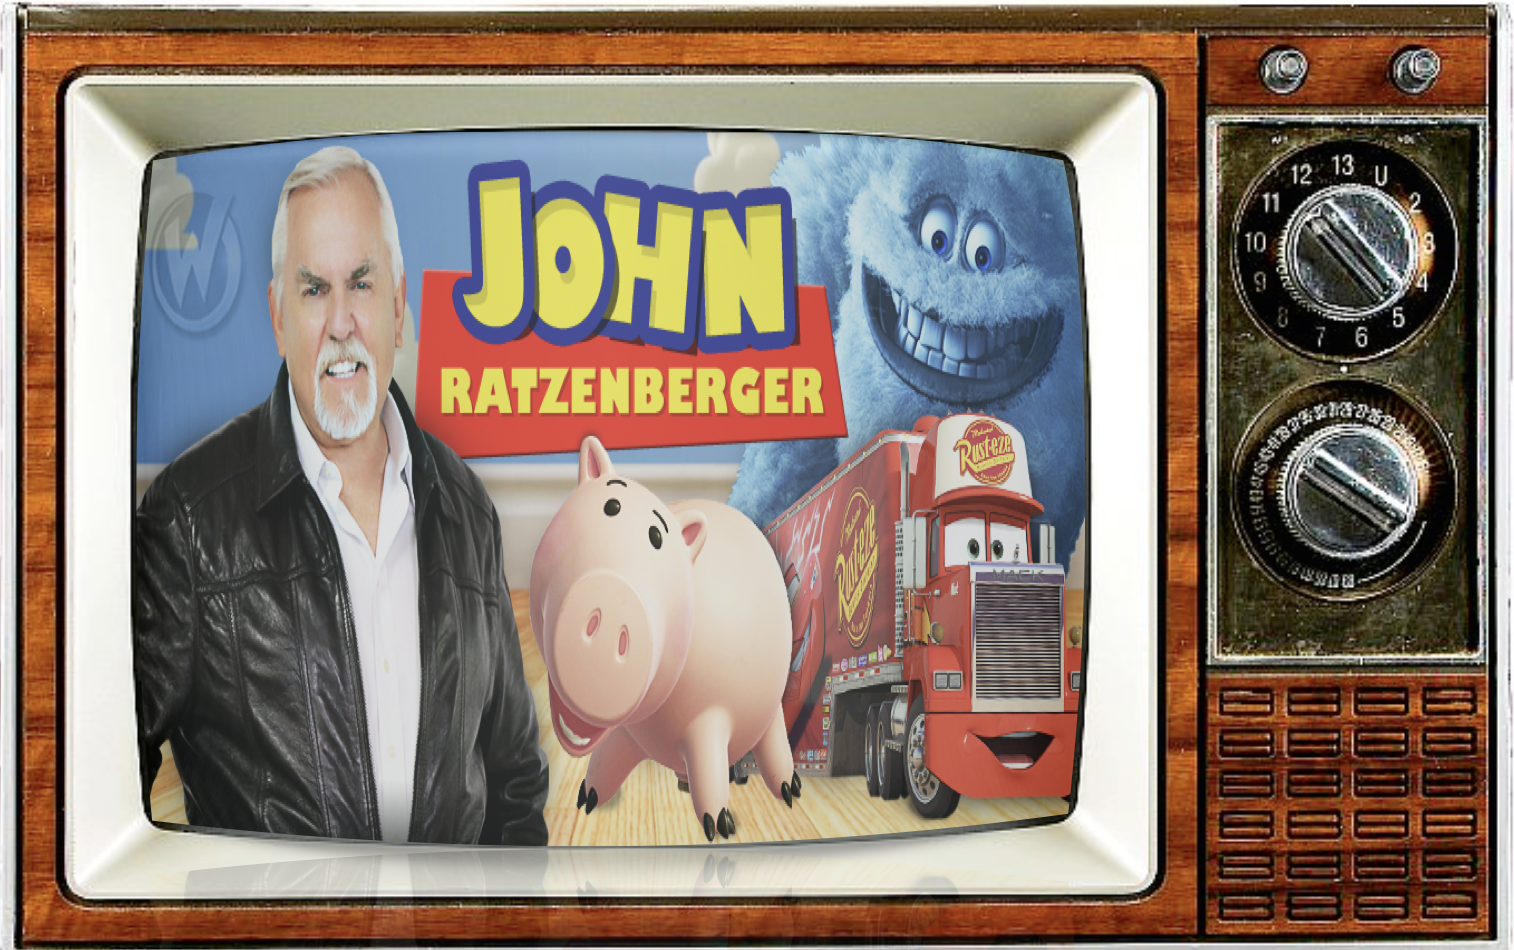 SMC Episode 81: Cheers to Pixar! The JOHN RATZENBERGER “That One Guy’ Episode